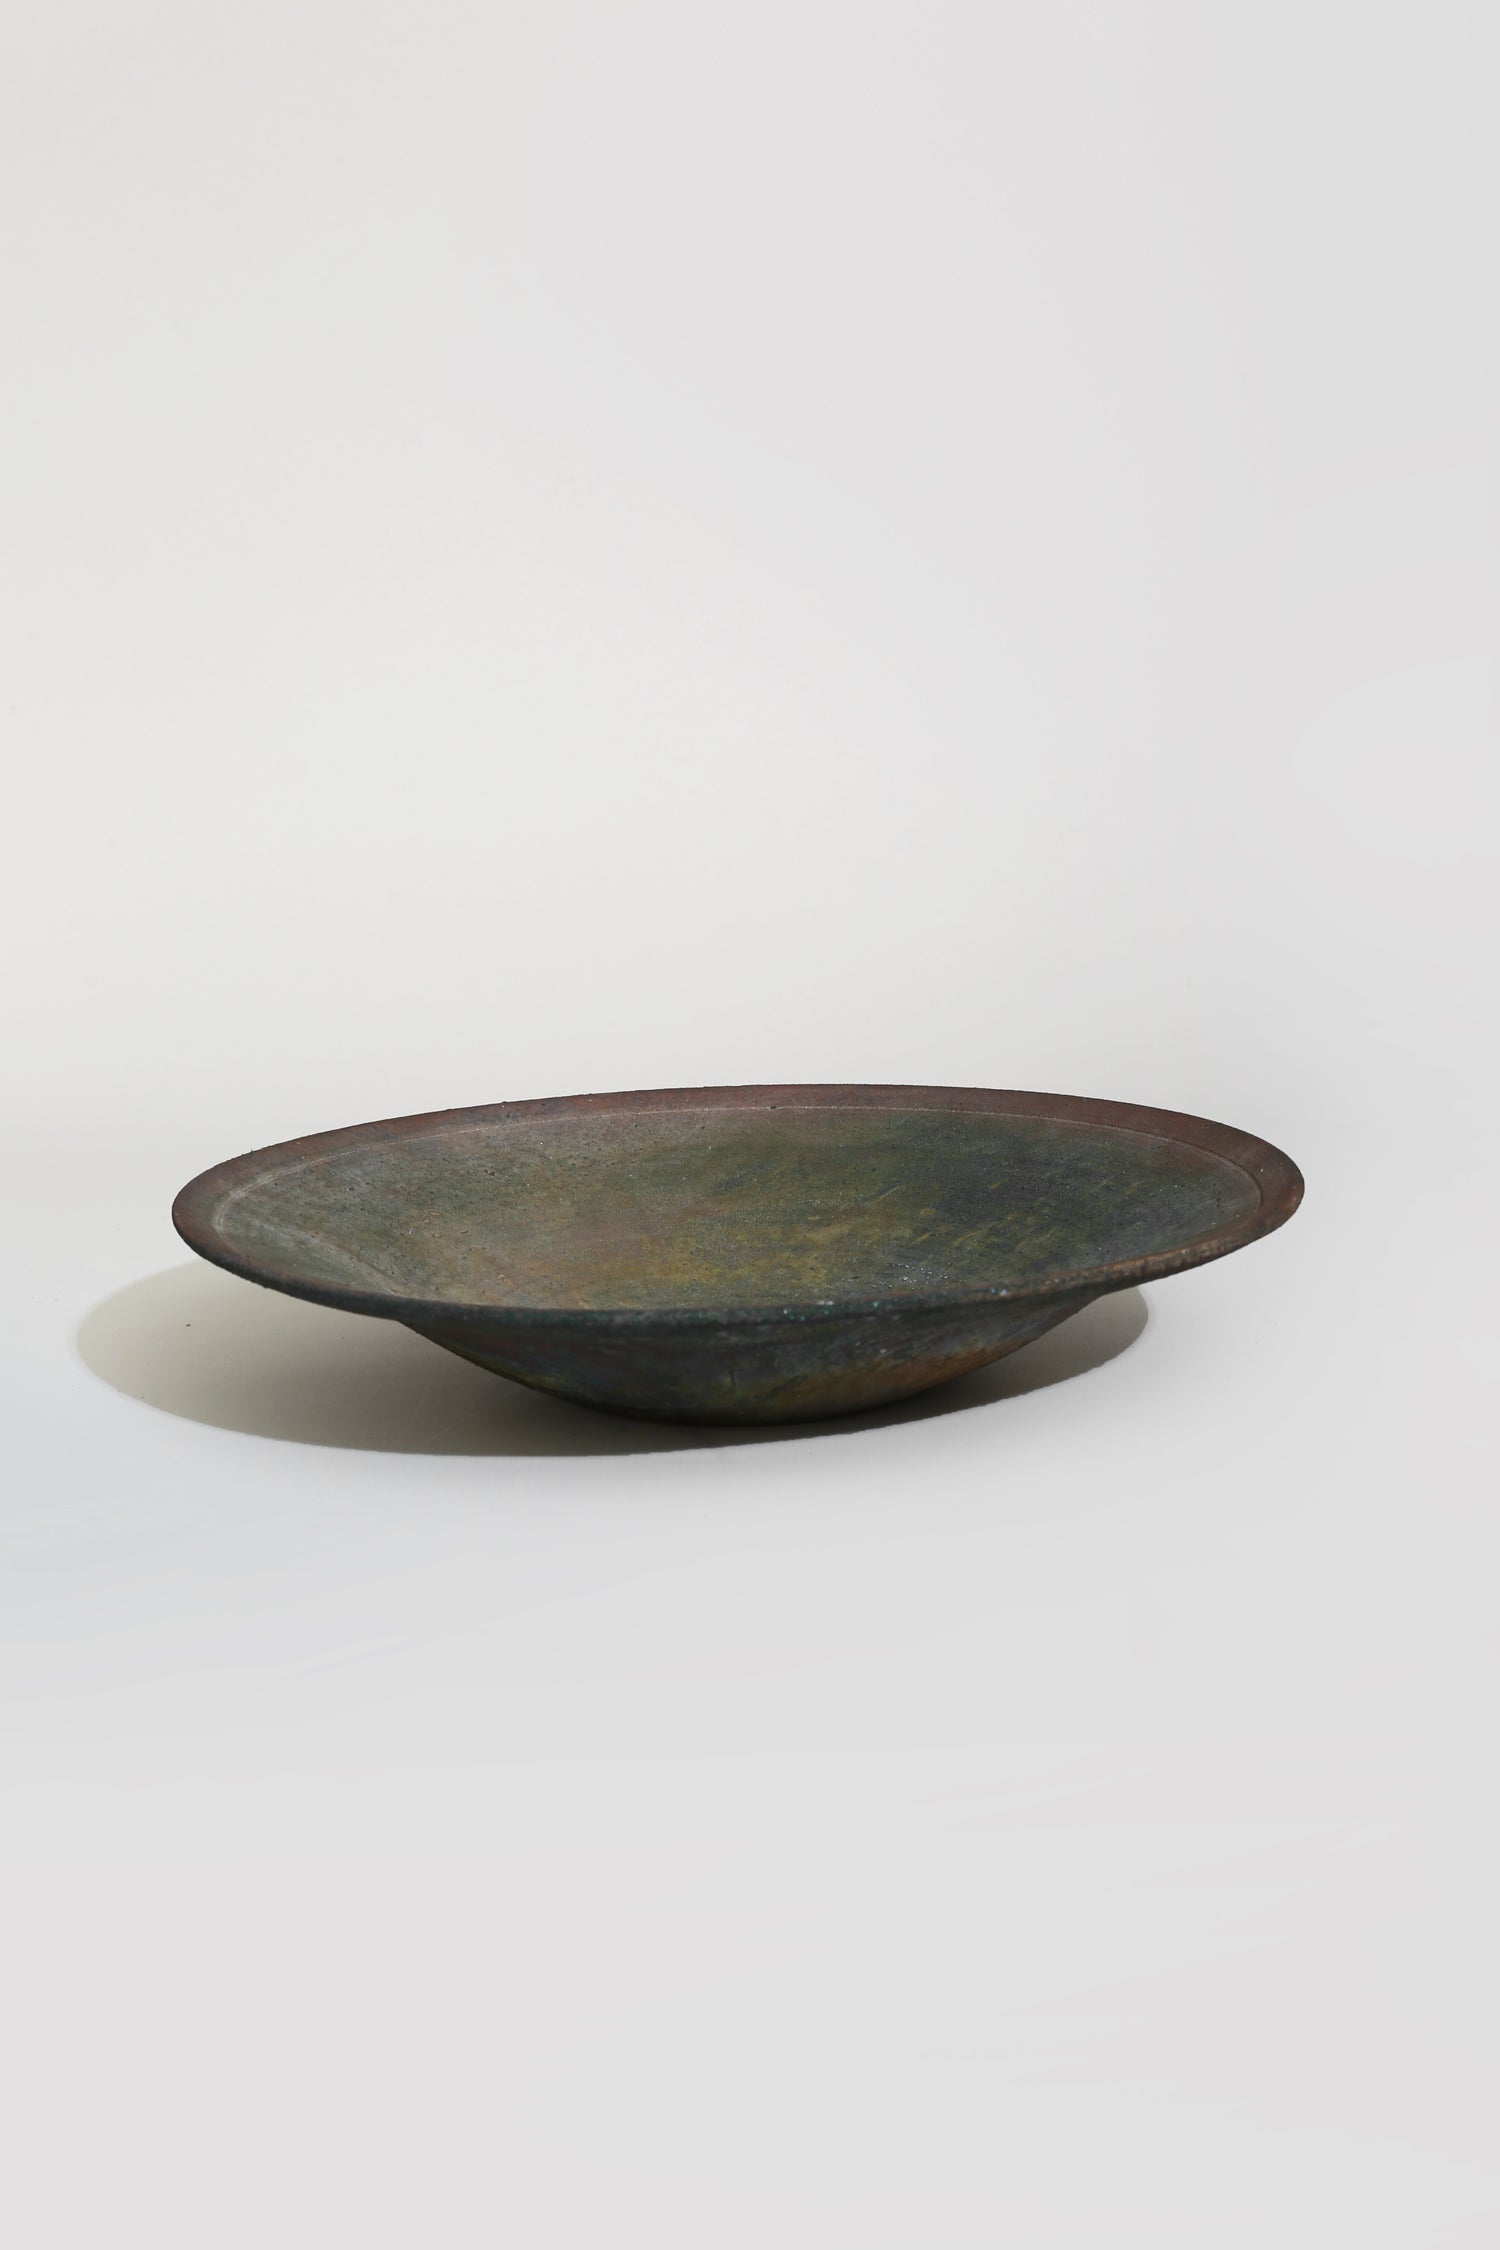 Textural Artisan Pottery Bowl